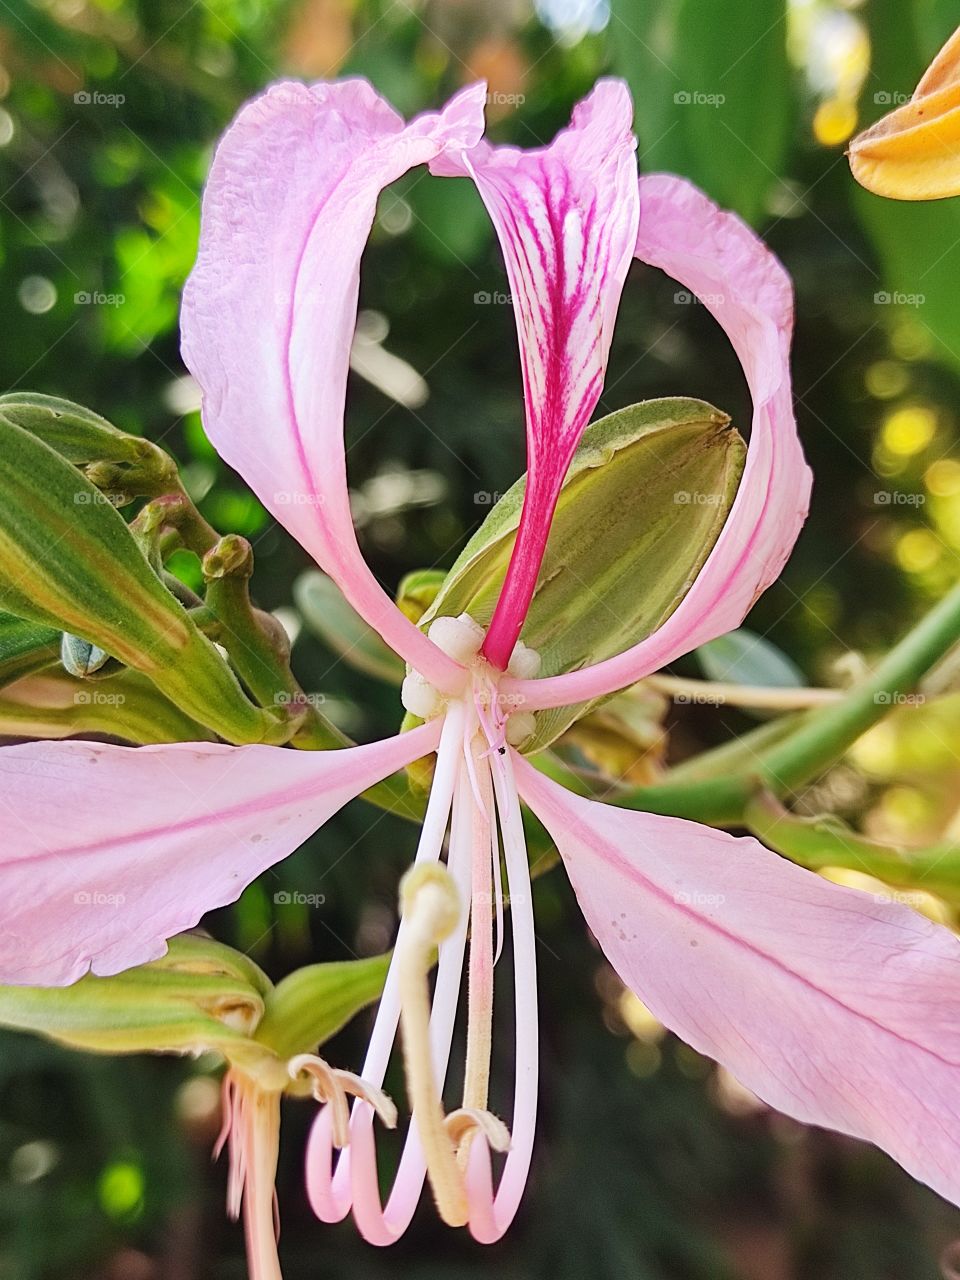 pink flower shot on macro lens of smartphone